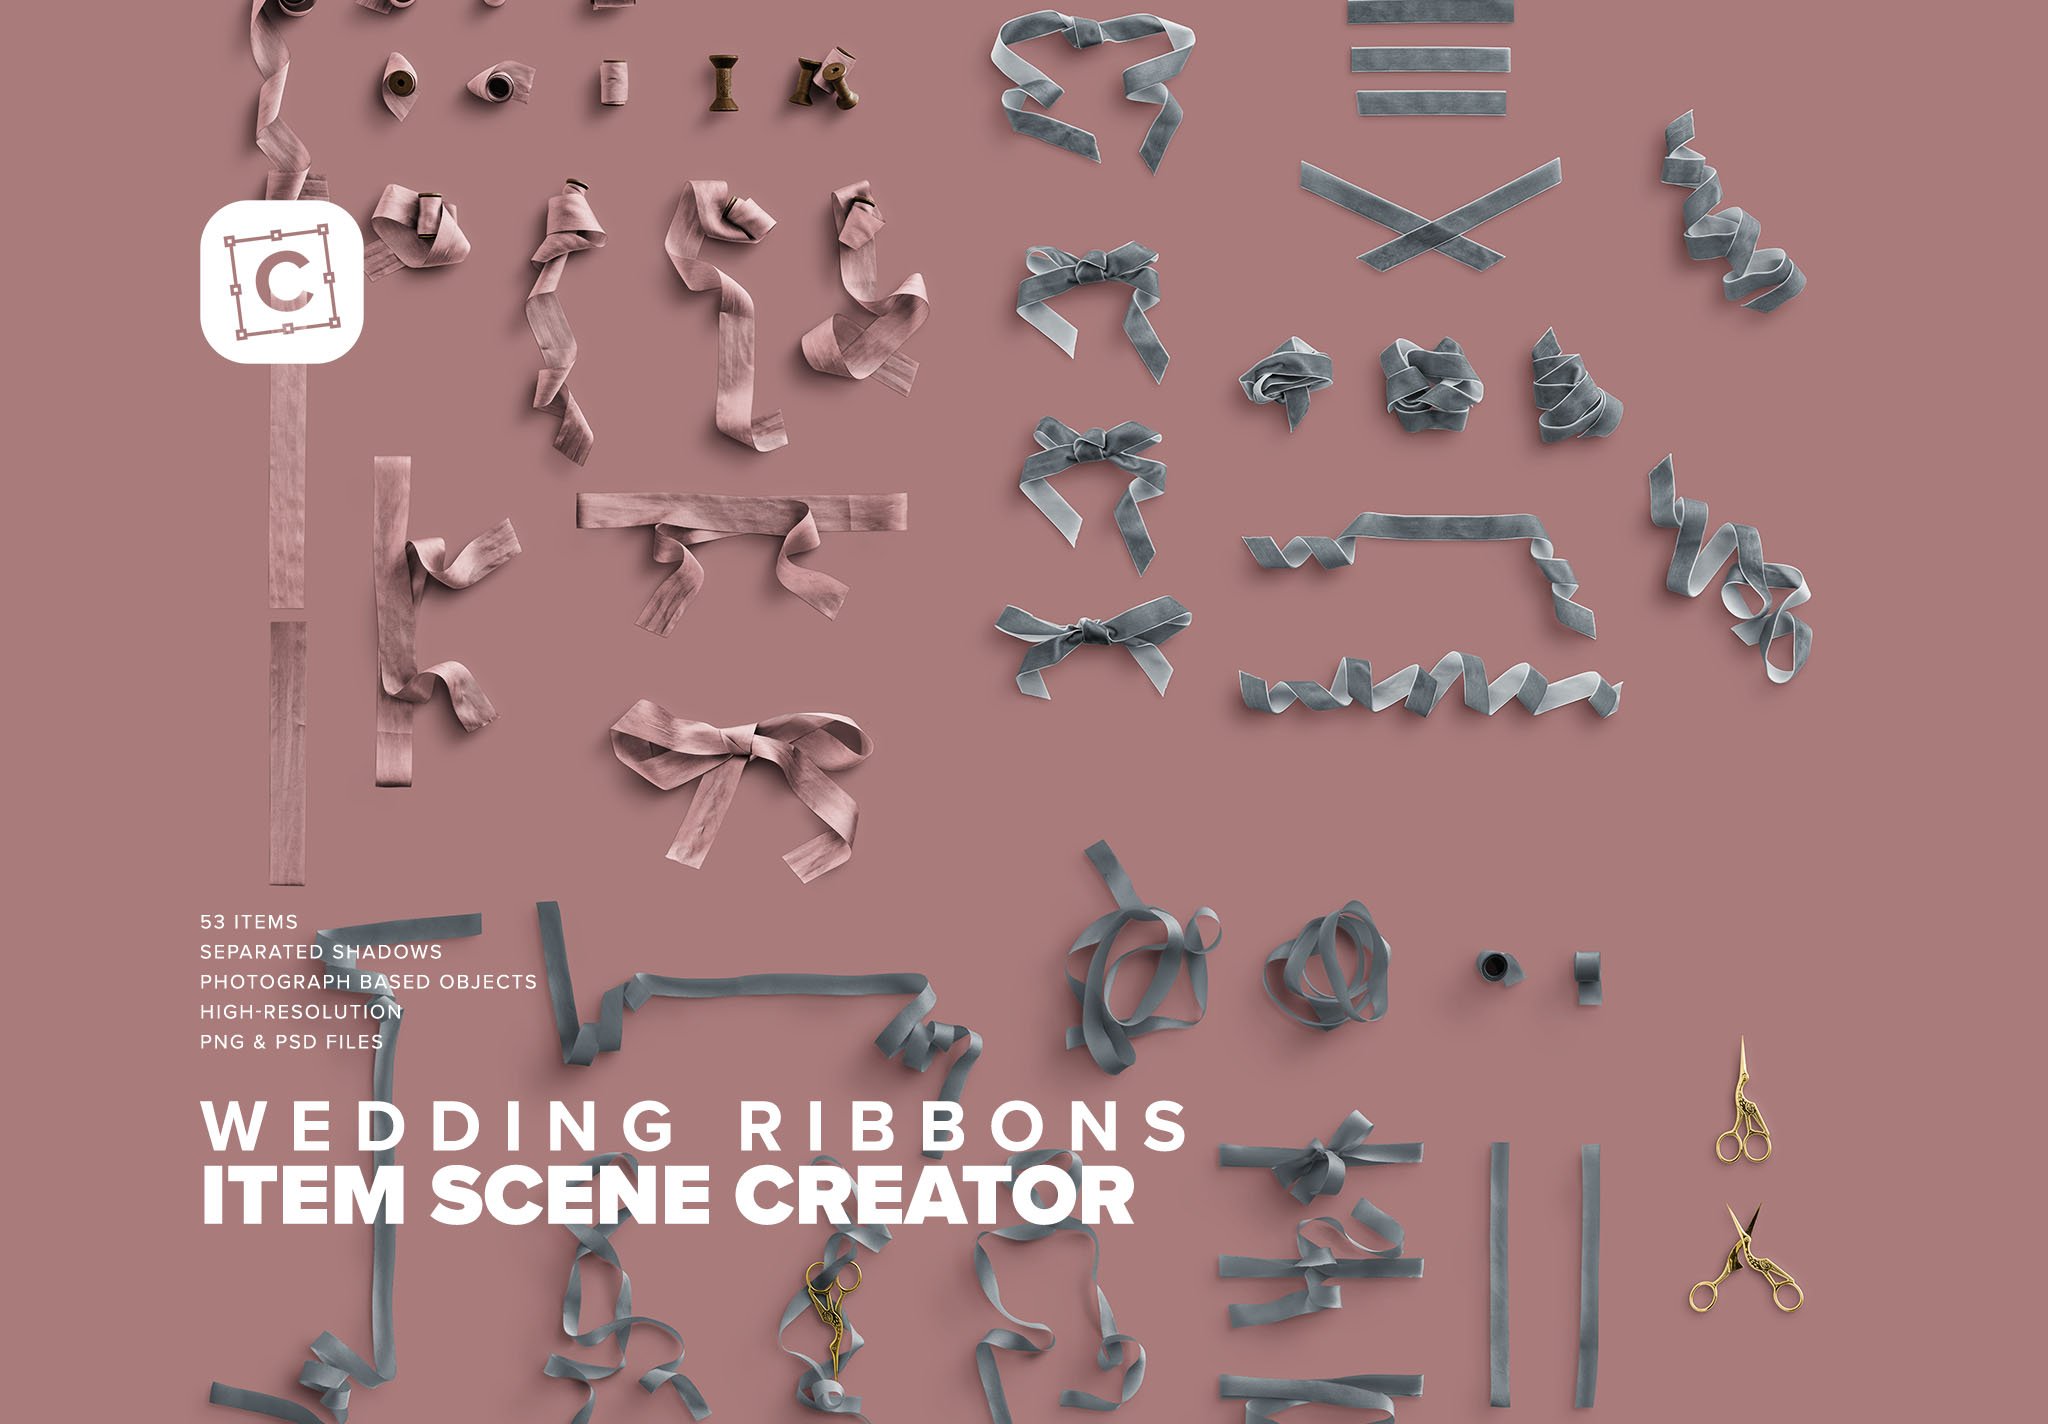 Wedding Ribbons Scene Creator cover image.